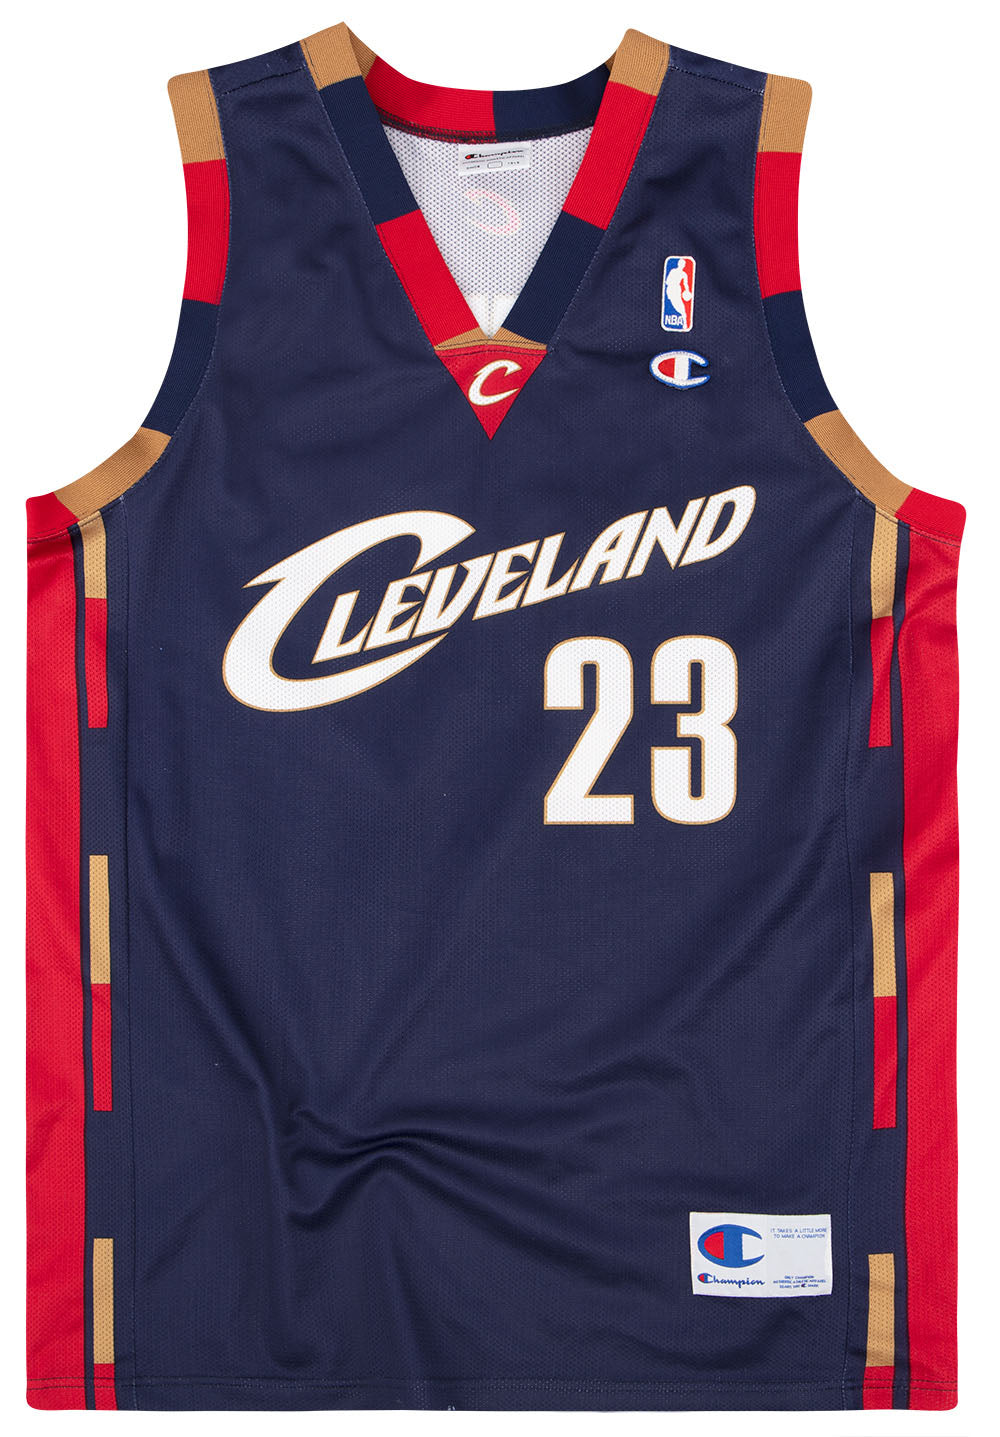 Cleveland Cavaliers Alternate Uniform